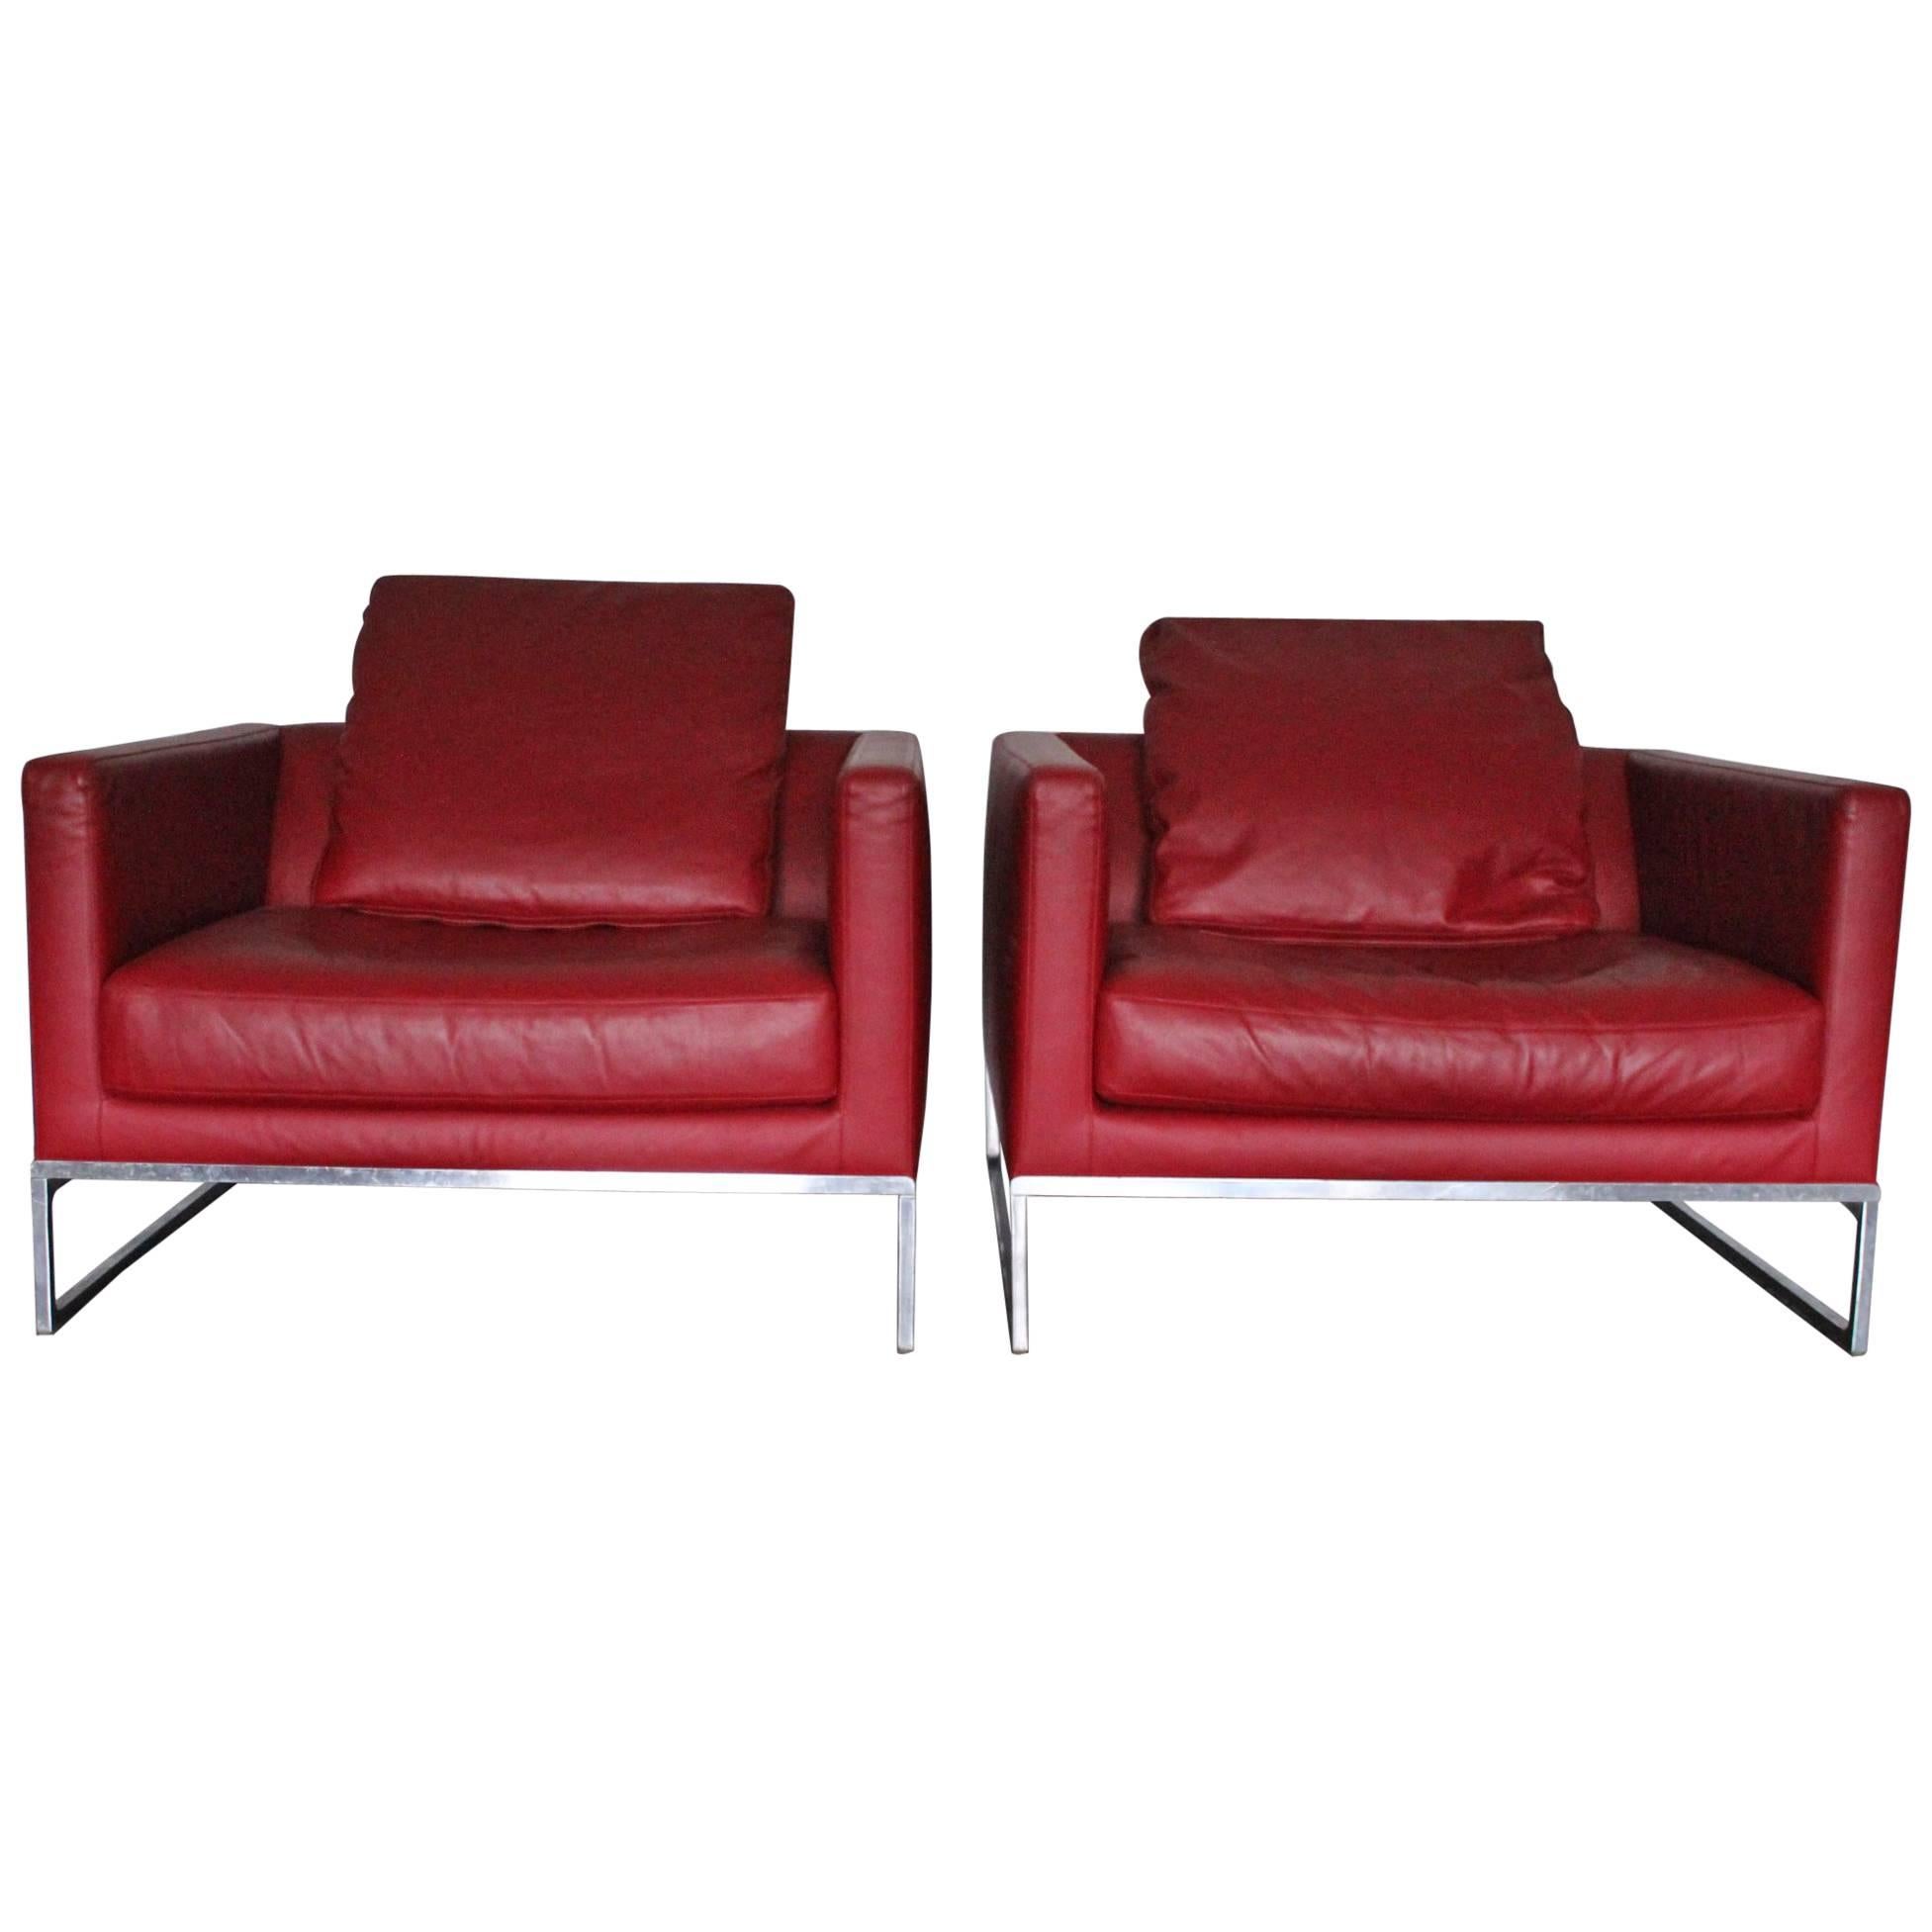 B&B Italia “Tight” Large Armchair in “Gamma” Red Leather